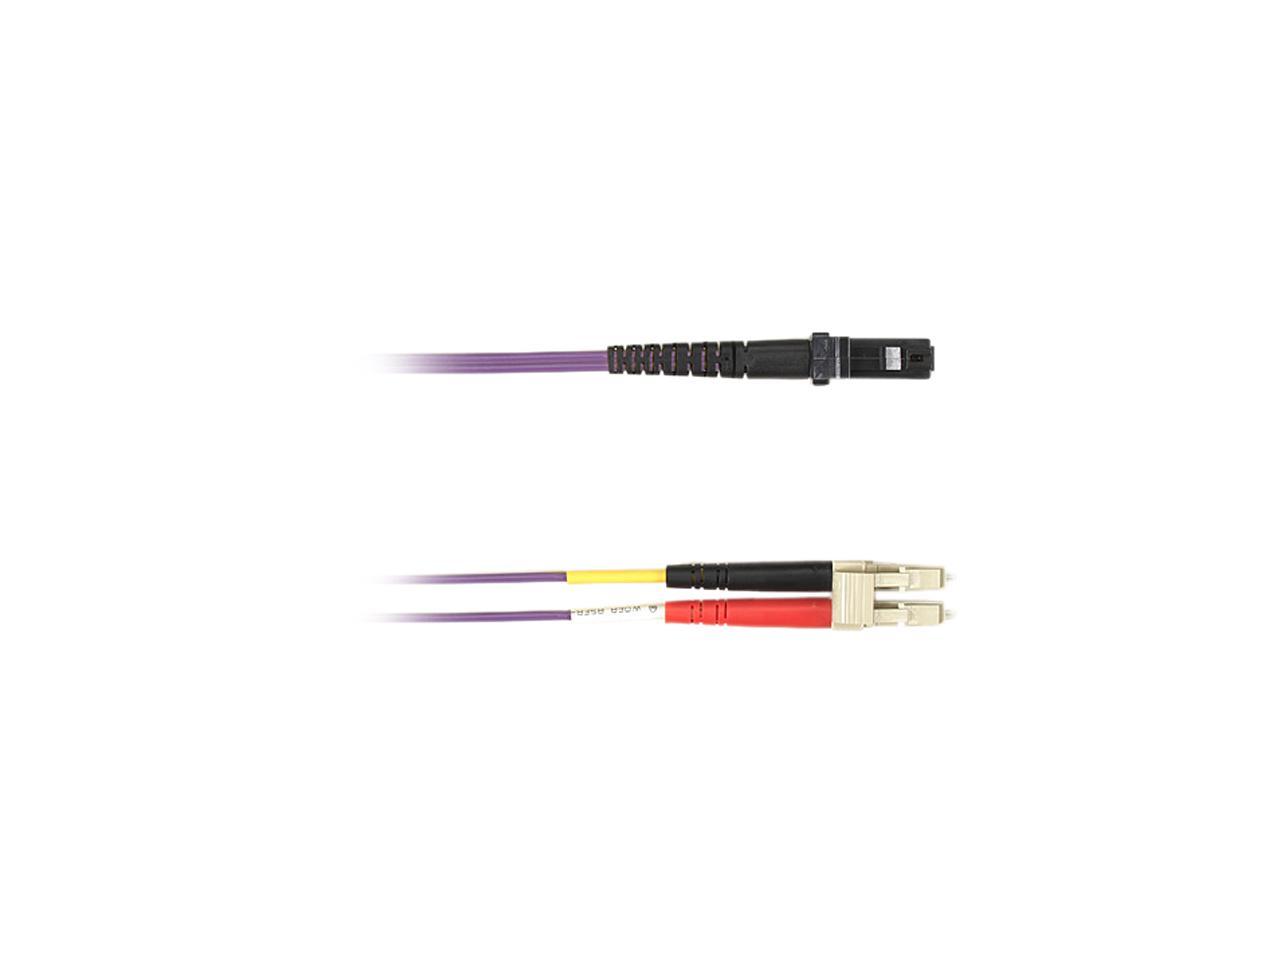 Om1 62.5/125 Multimode Fiber Optic Patch Cable - Ofnr Pvc, Sc To Sc, Orange, 2-M Bbx-R62-002M-Scsc-Or